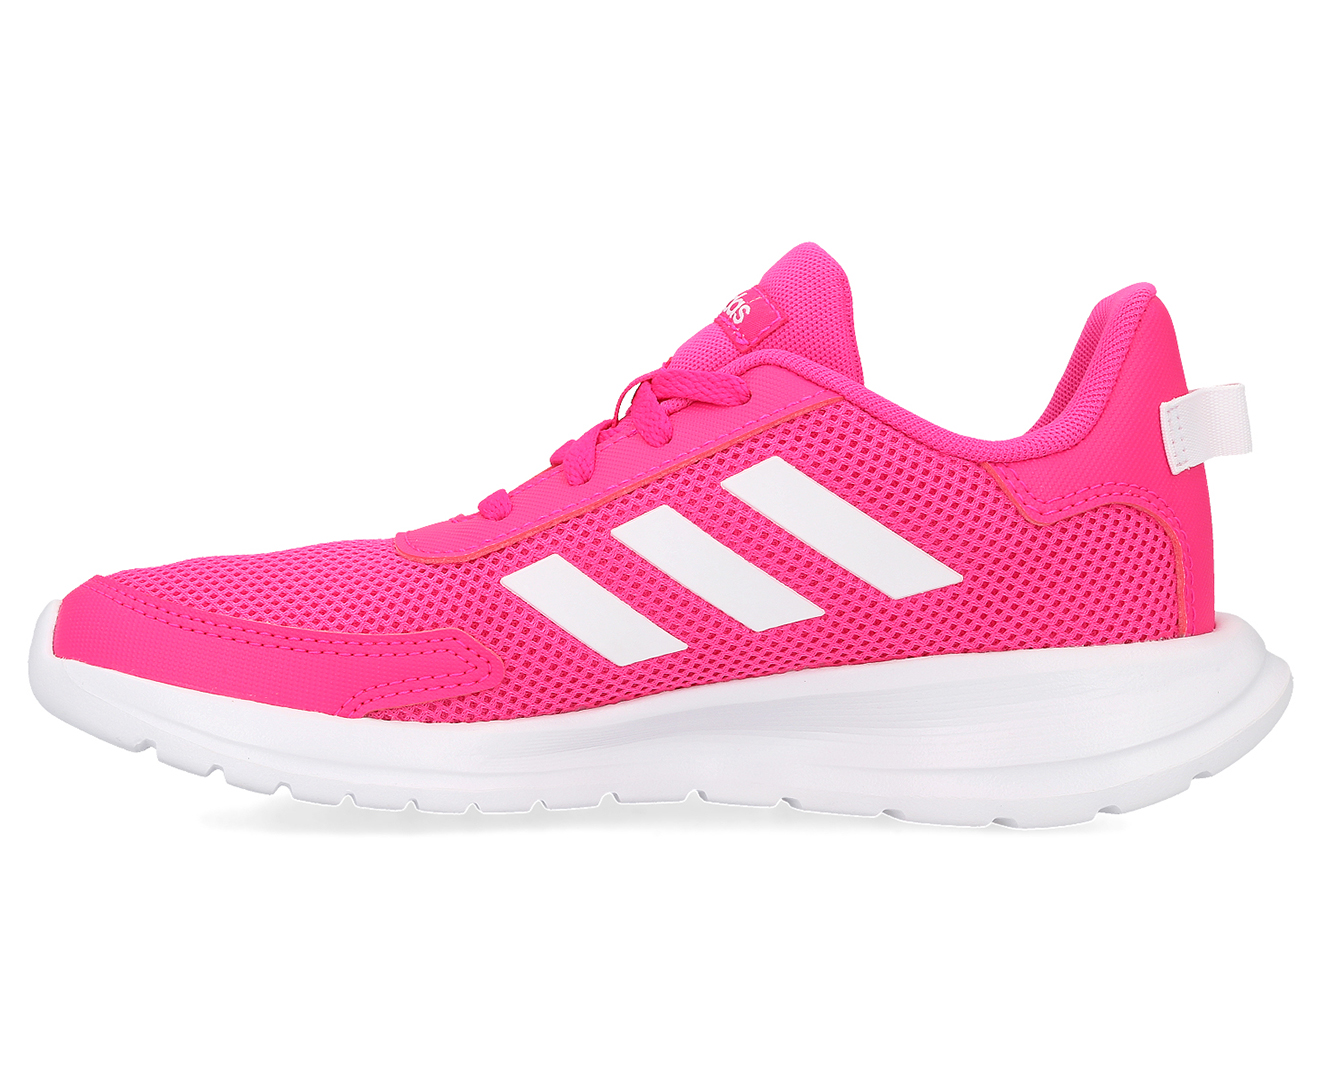 Adidas Girls' Tensaur Running Shoes - Pink/White/Granite | Catch.com.au